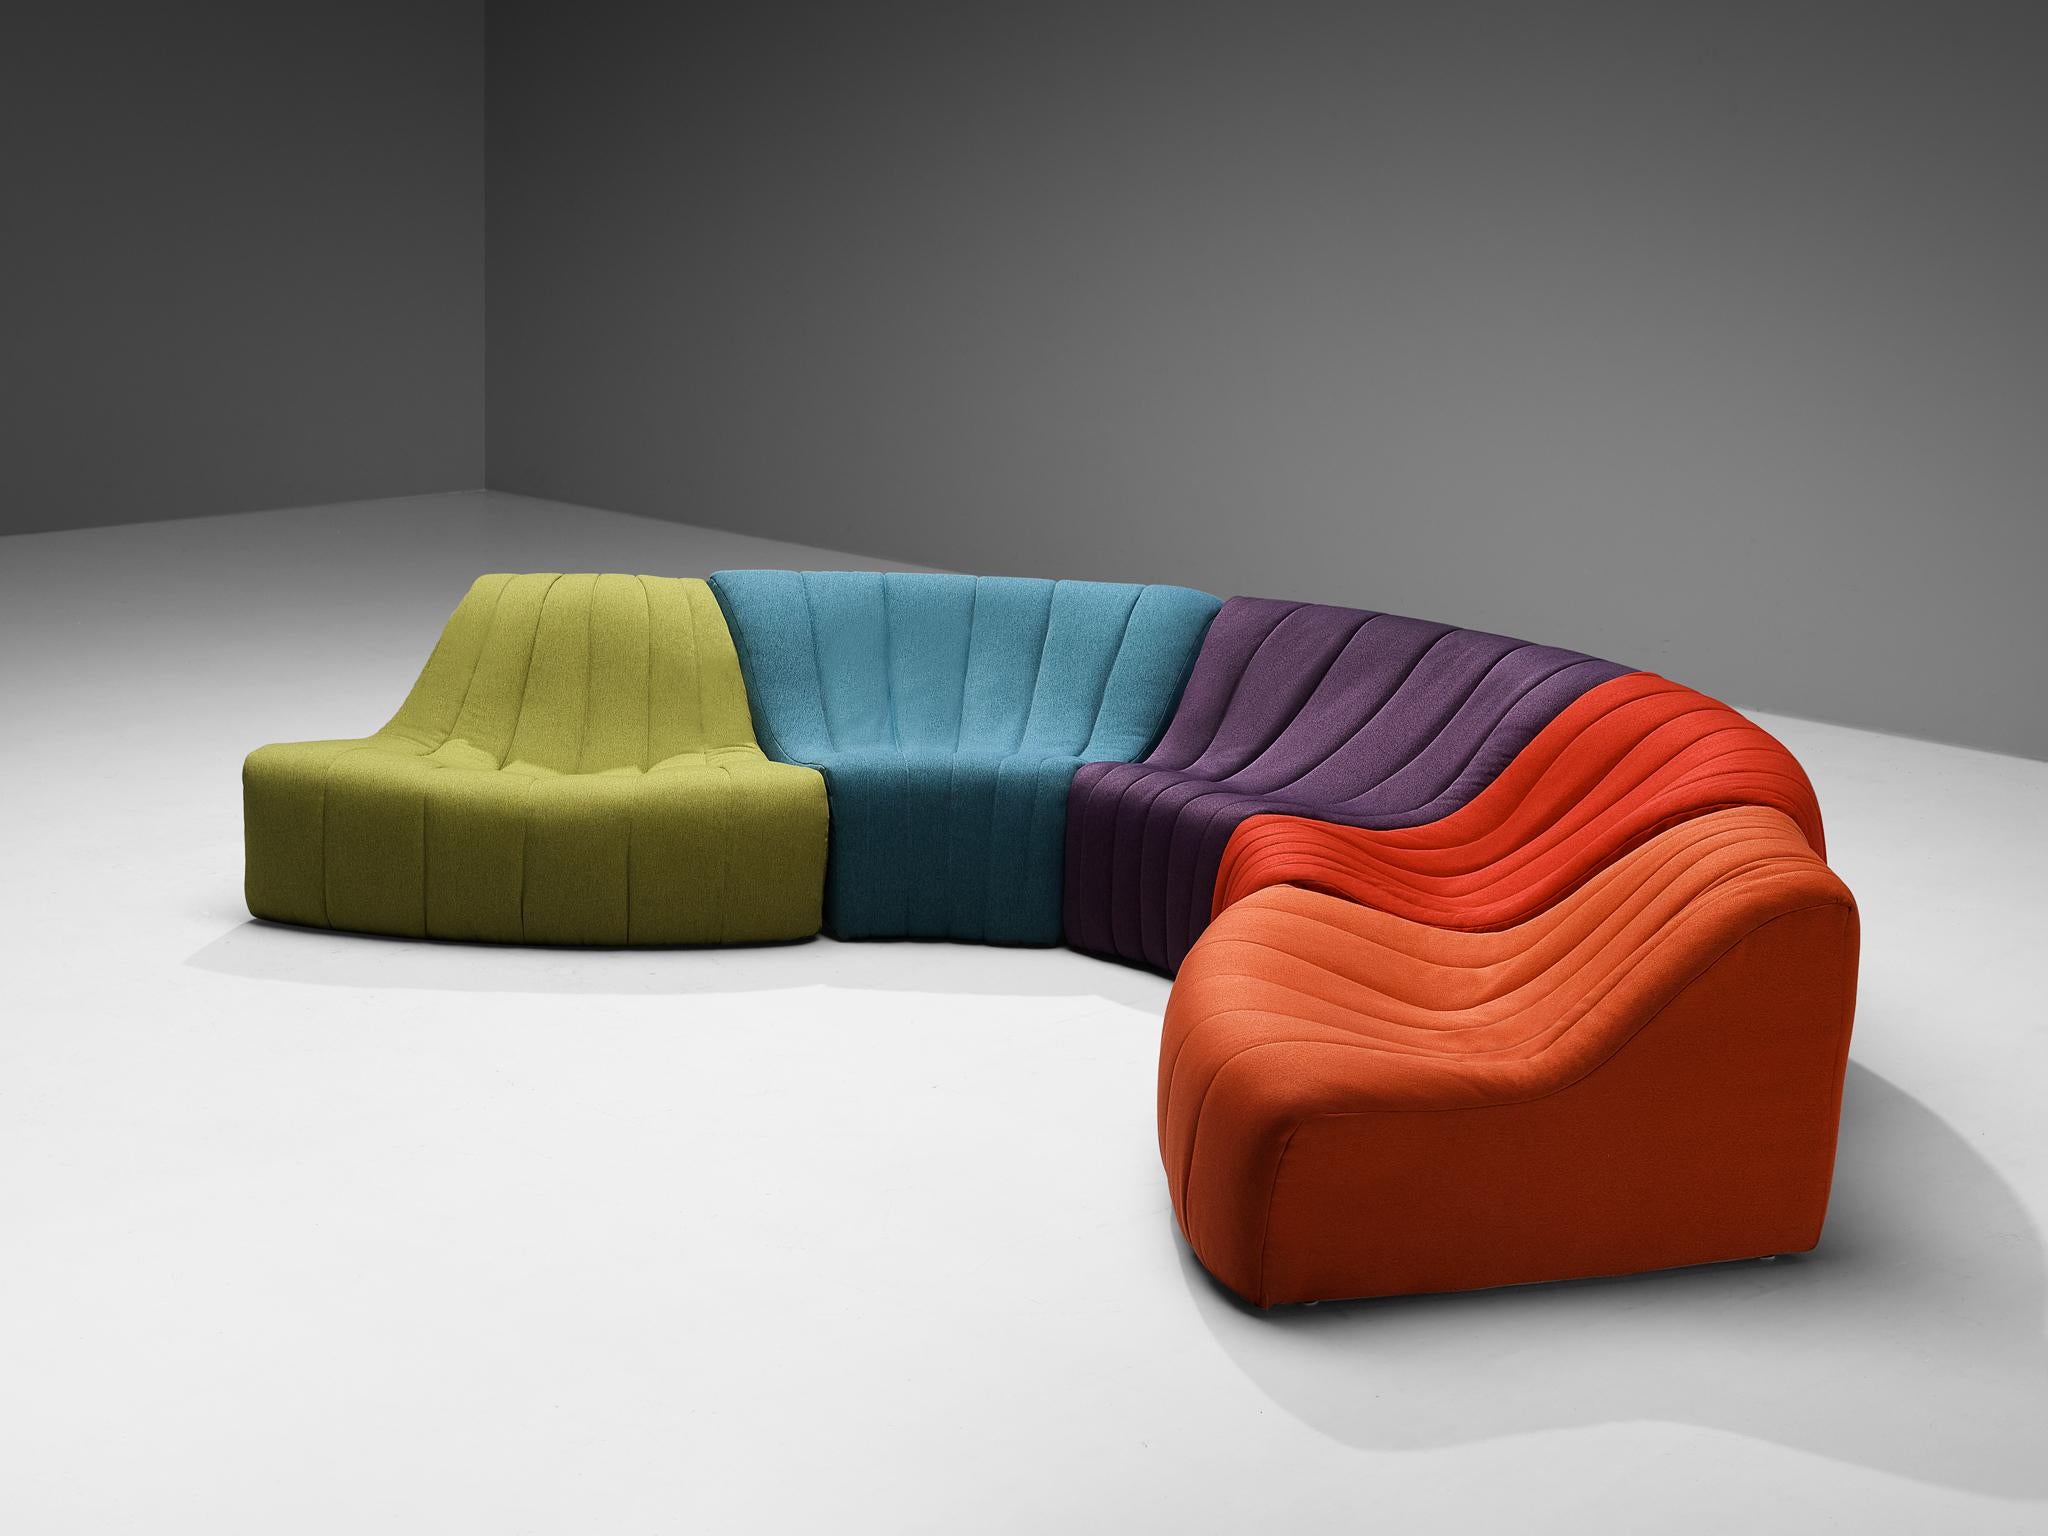 Kwok Hoi Chan for Steiner 'Chromatic' Multicolored Modular Sofa 1